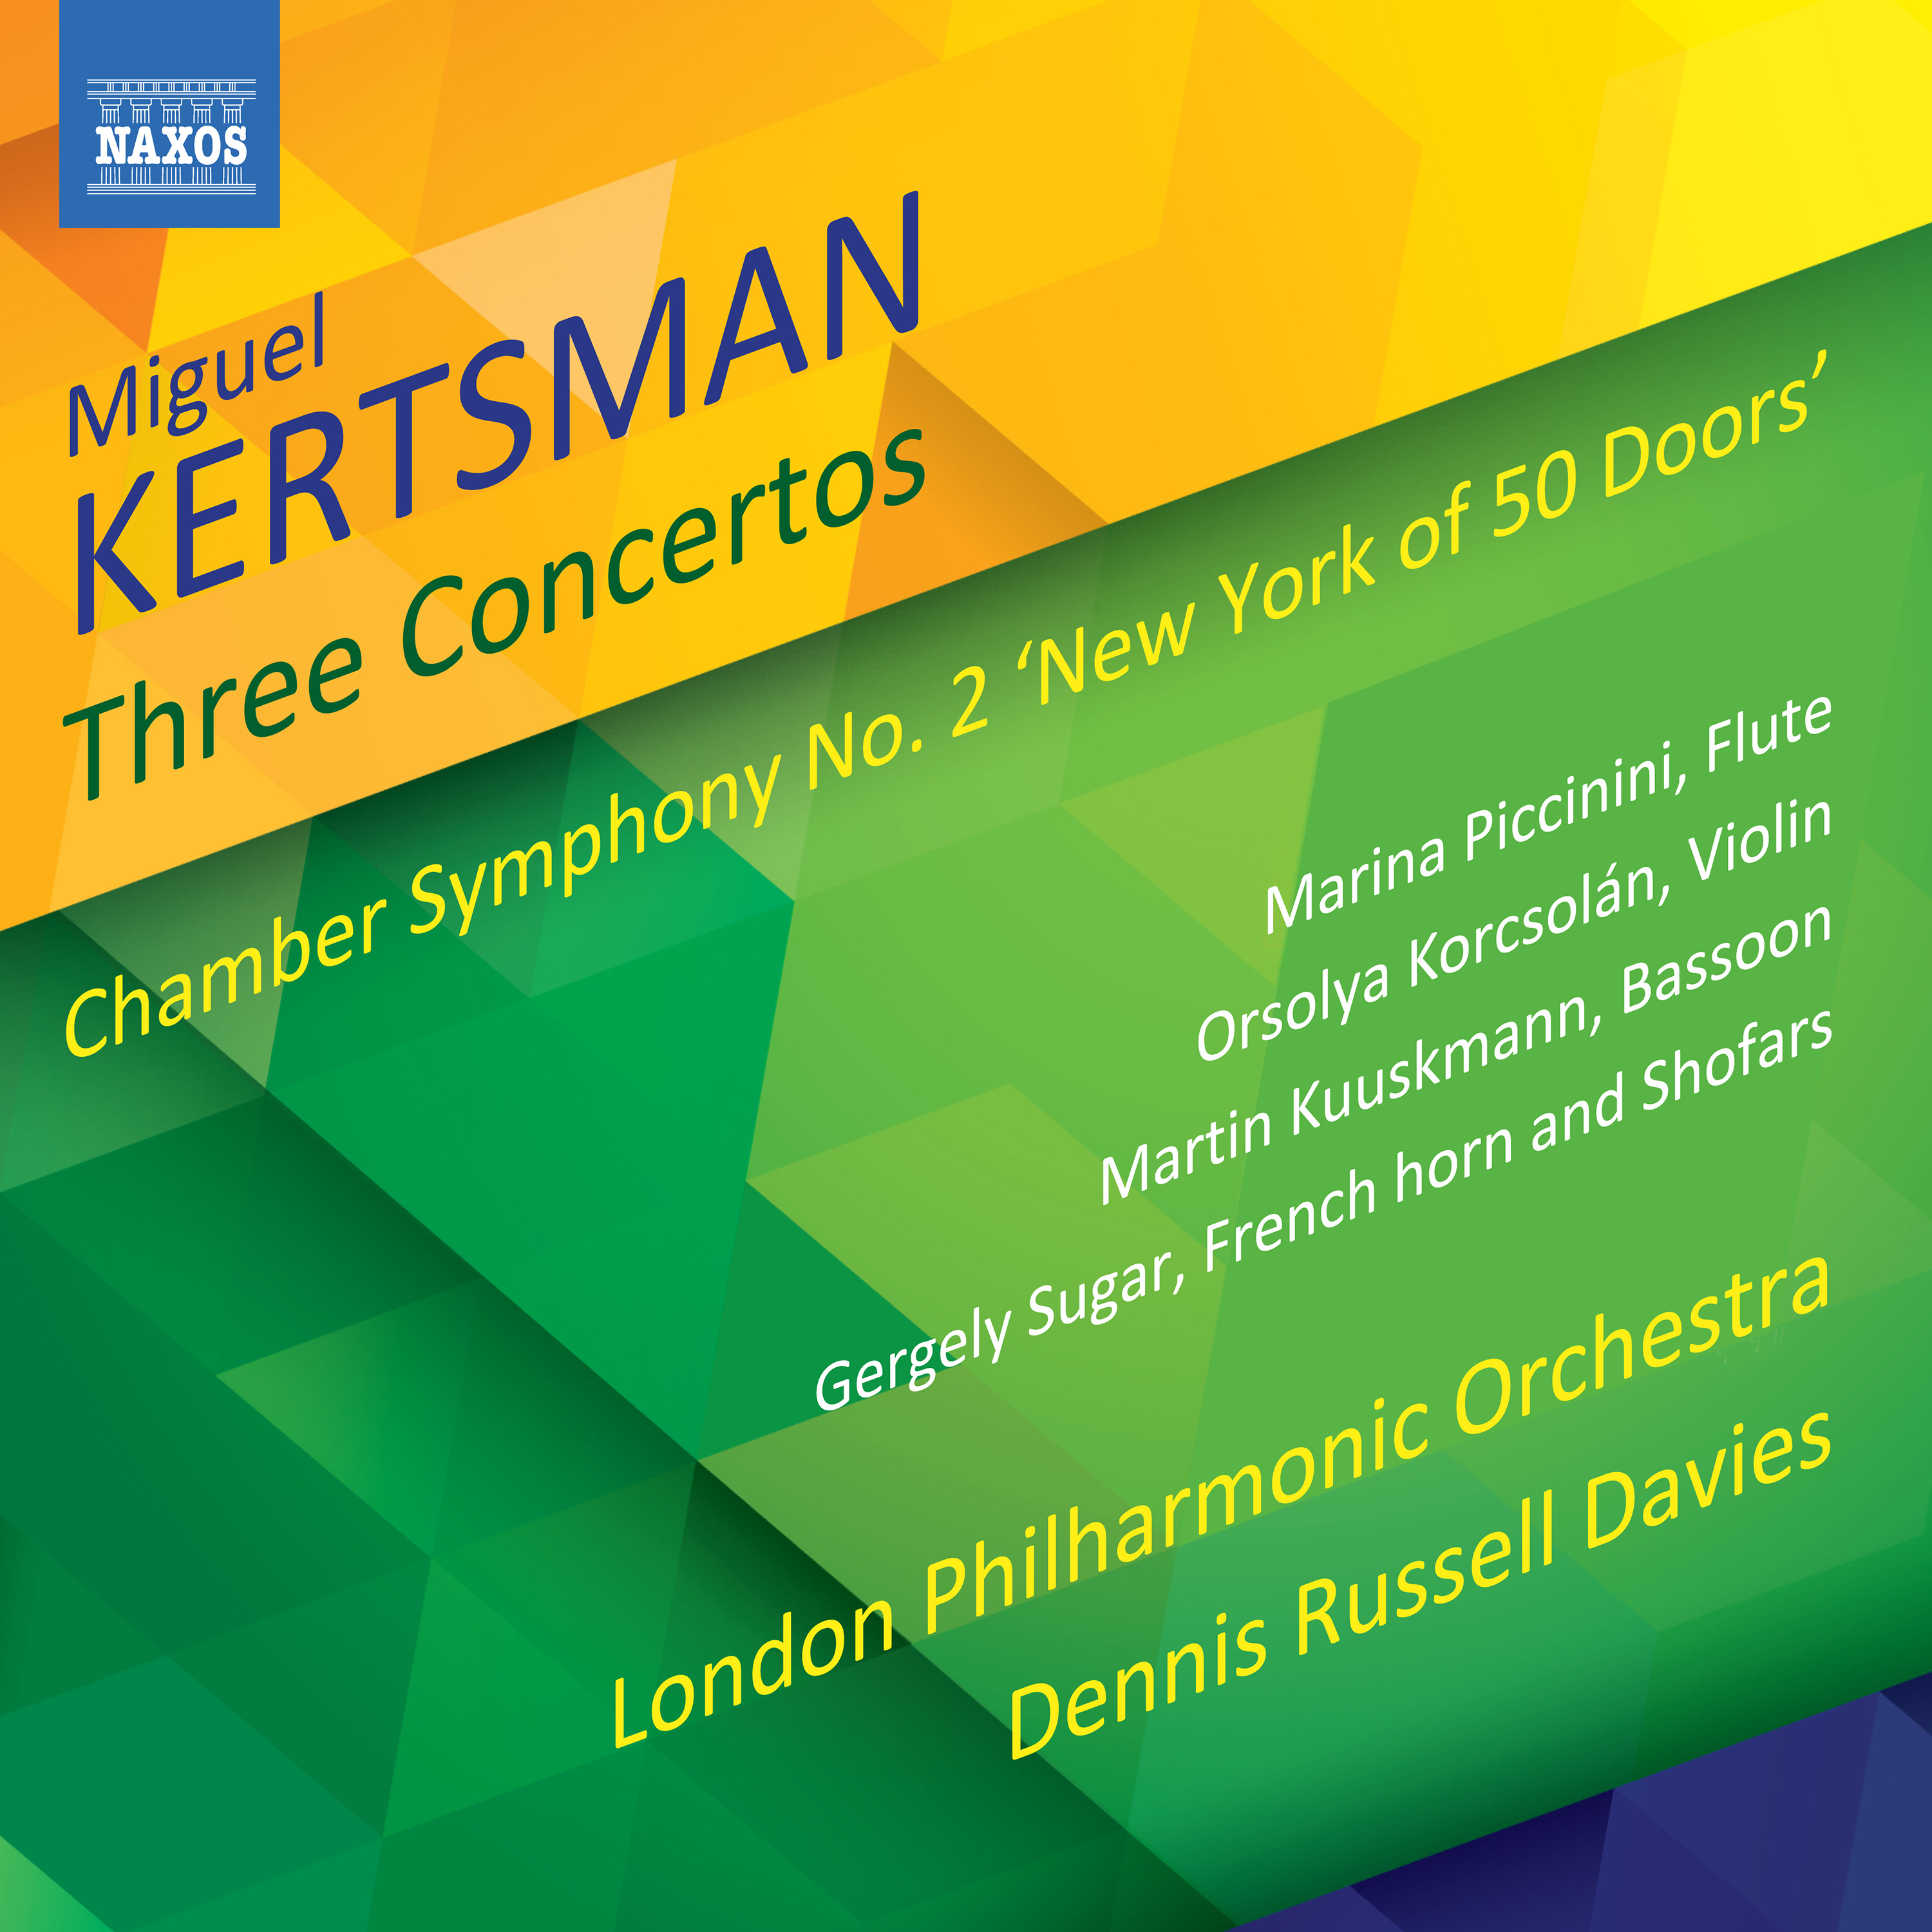 Chamber Symphony No. 2, "New York of 50 Doors"